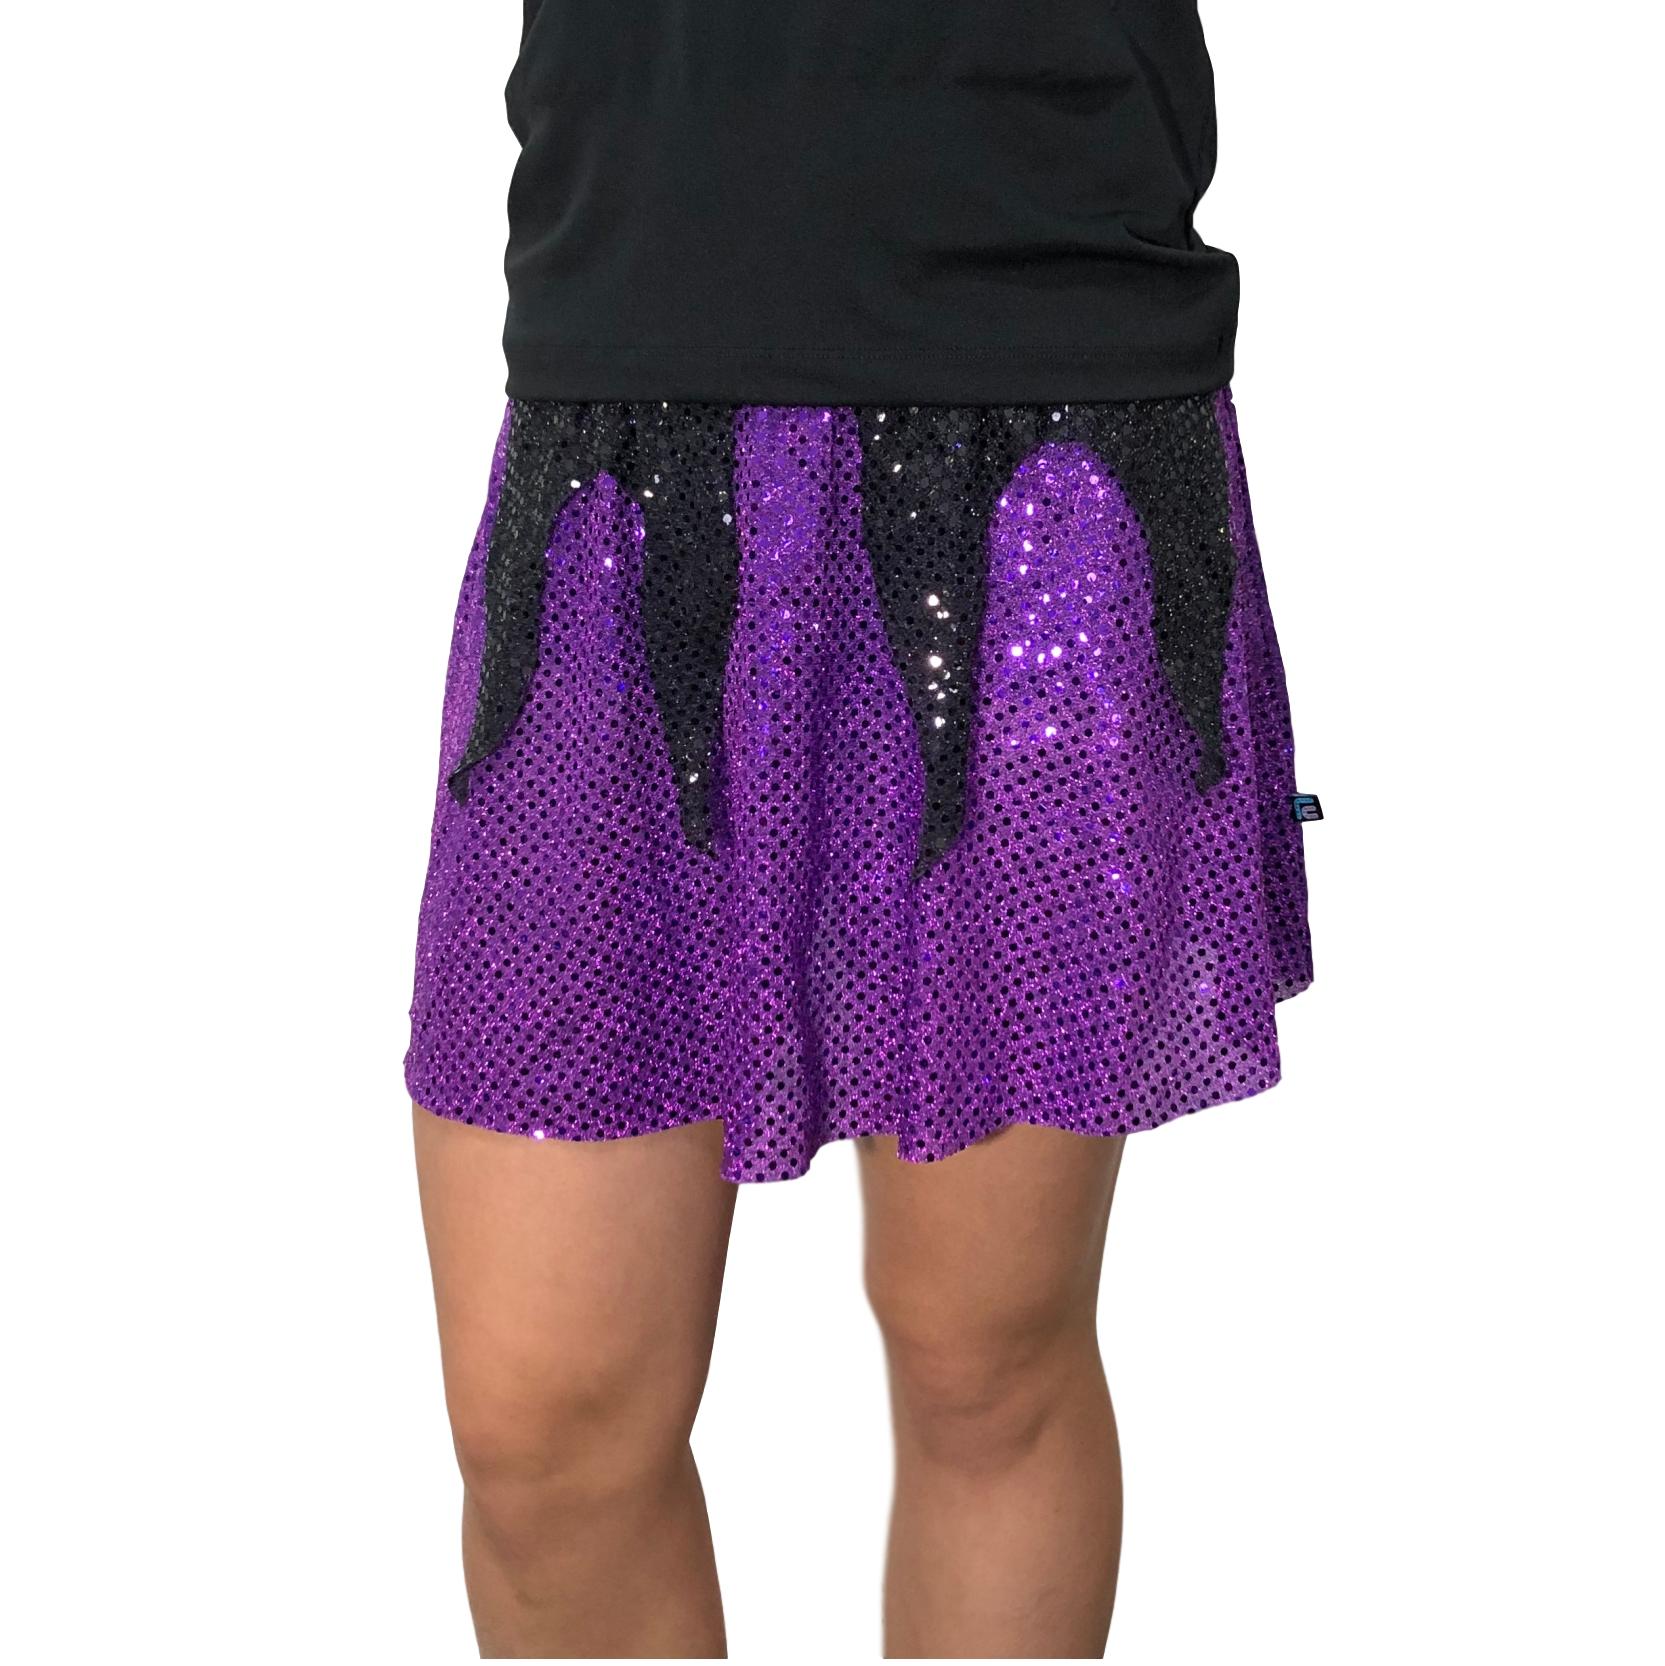 "Ursula" Sea Witch Skirt - Rock City Skirts